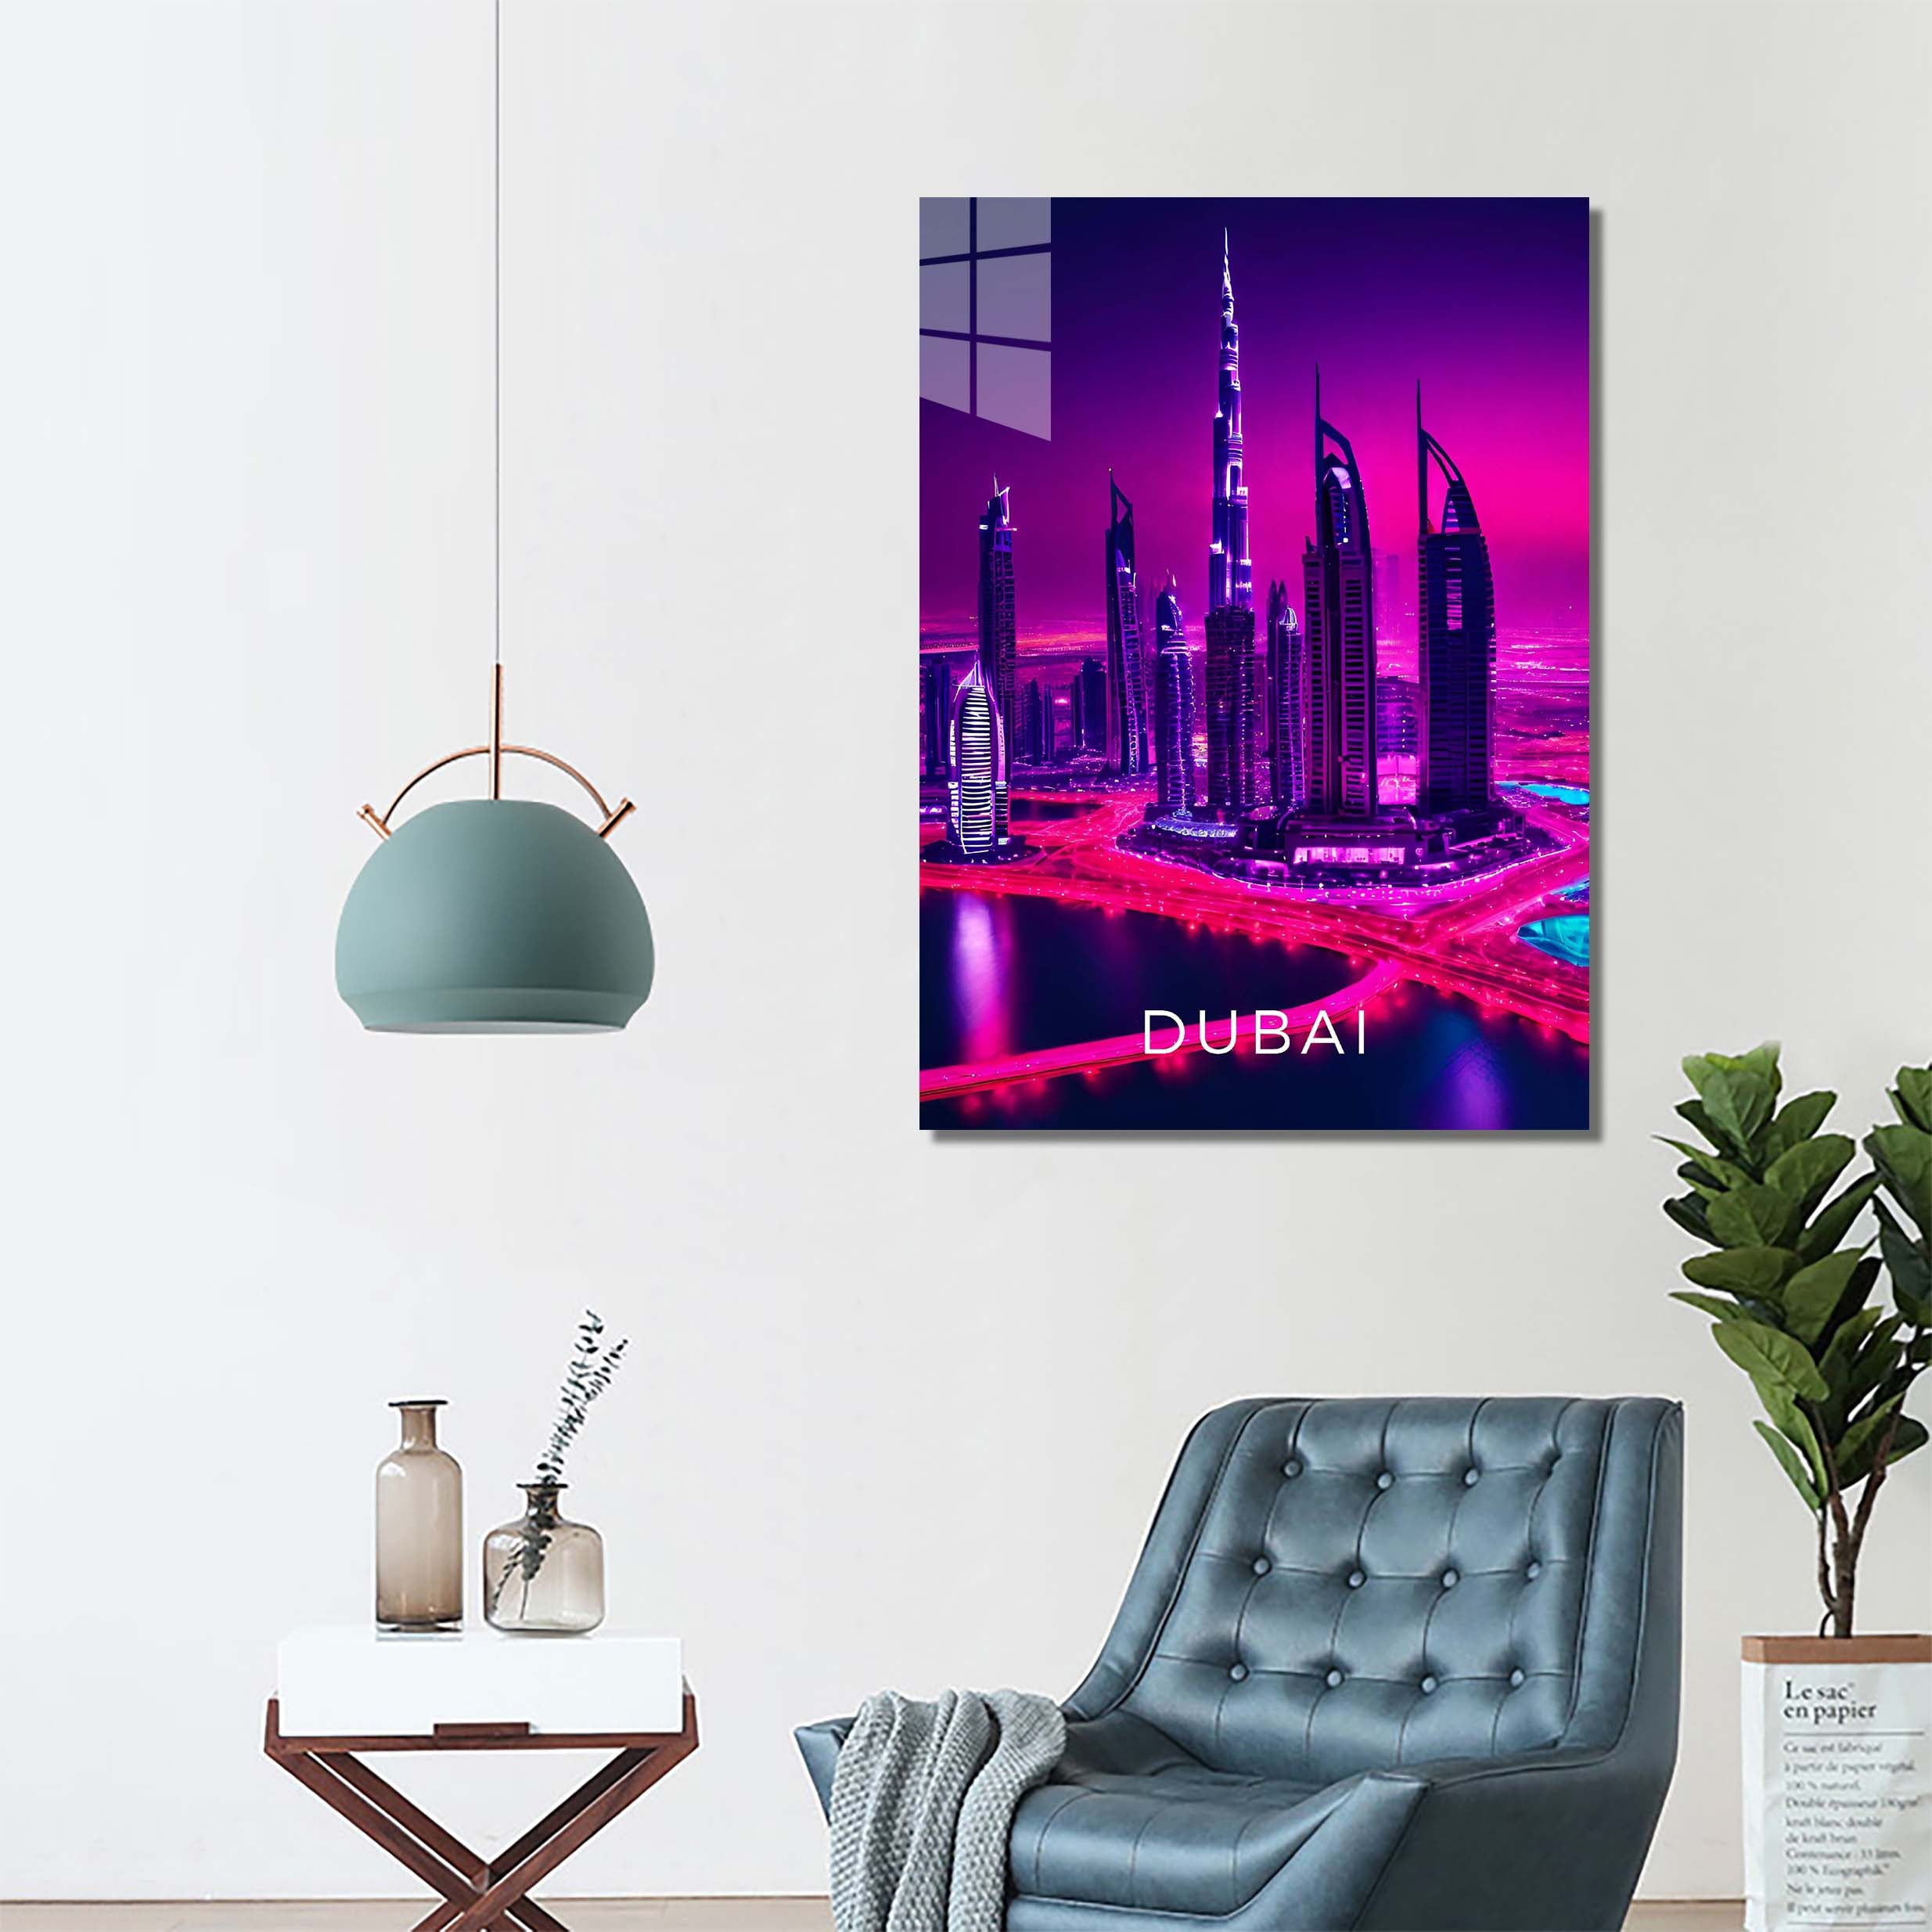 Dubai Retrowave-designed by @DynCreative